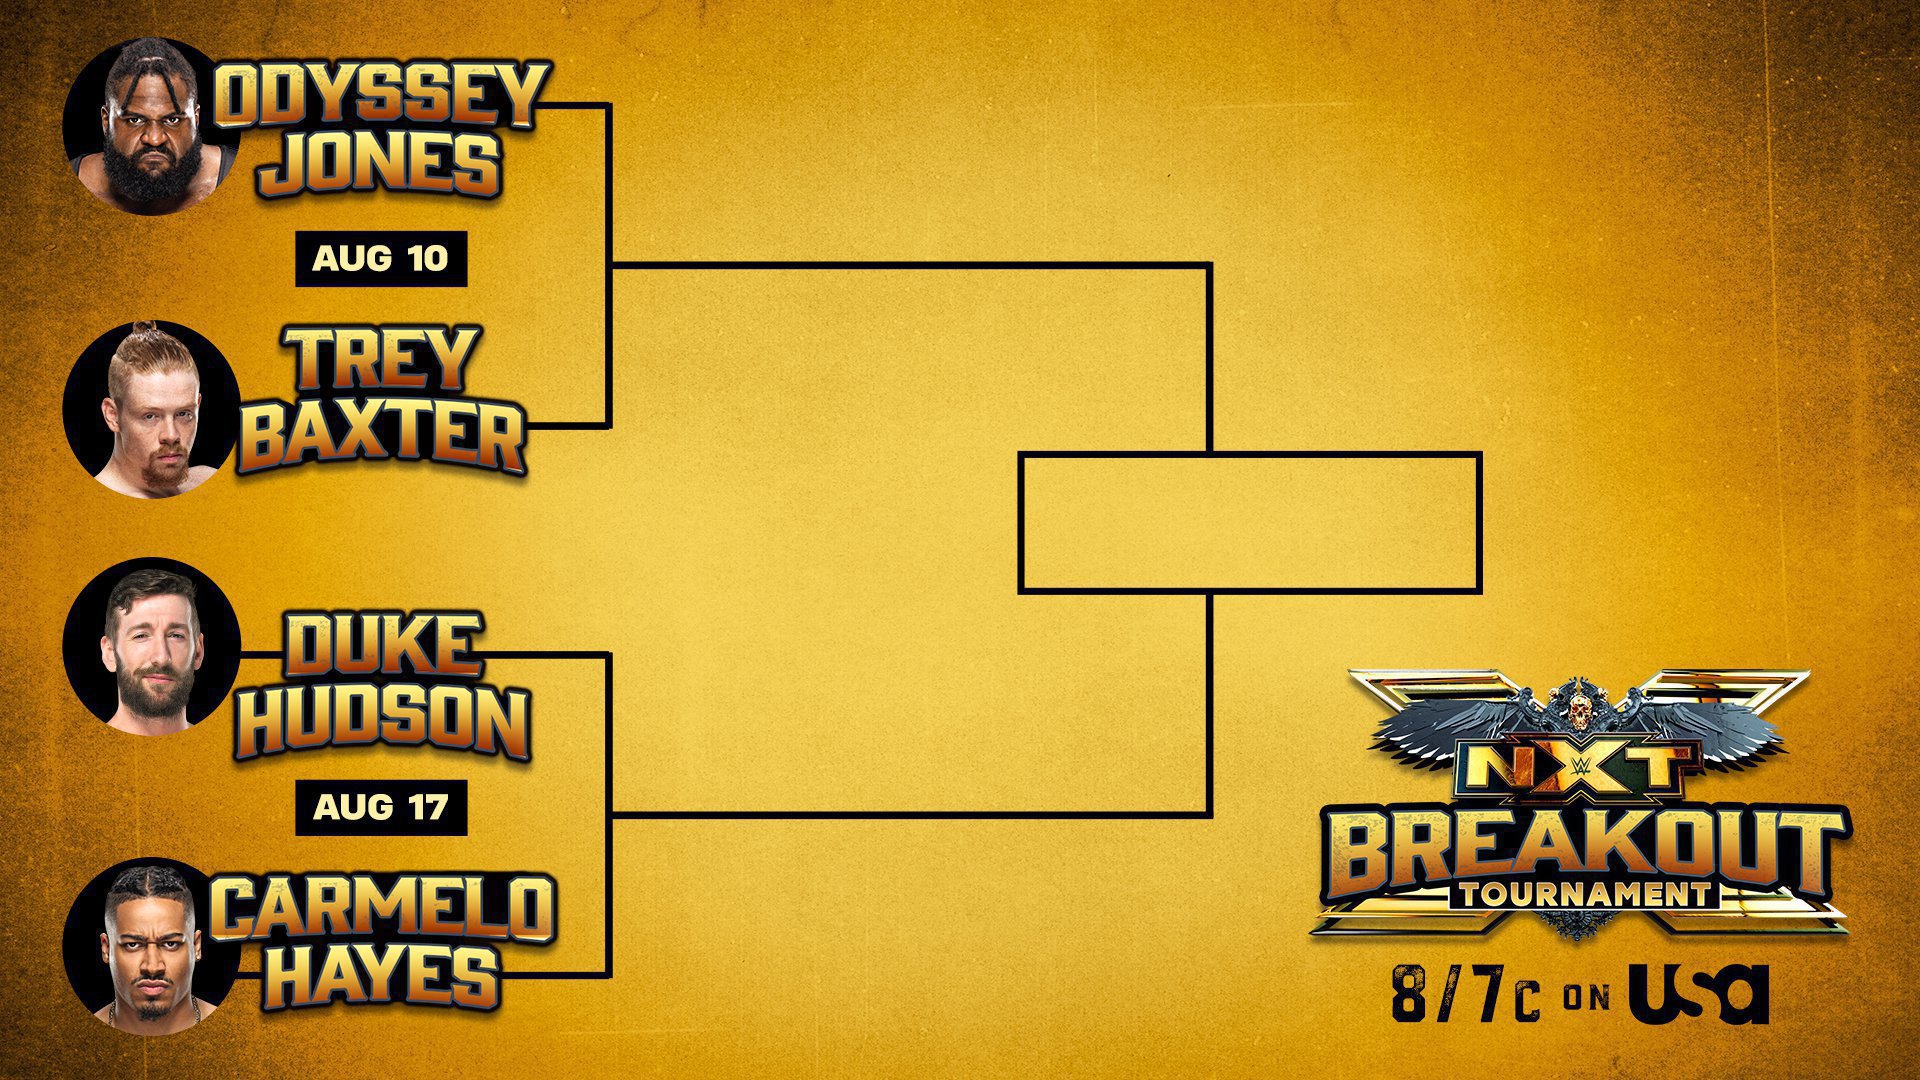 NXT Breakout Tournament Semifinals begin tonight on NXT WWE